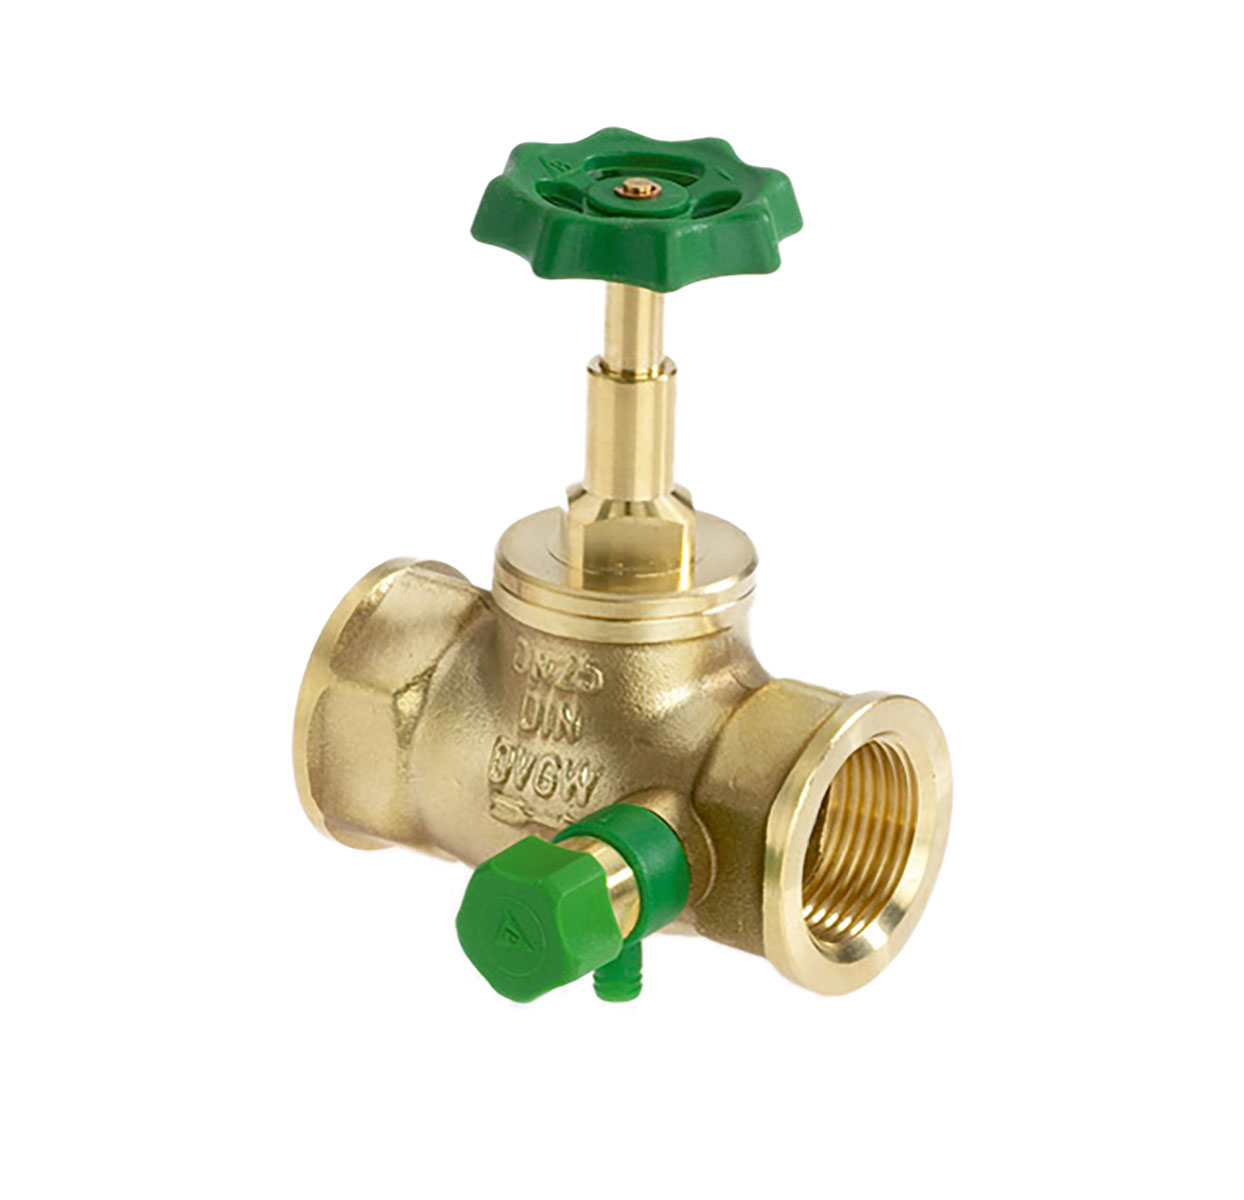 1304150 - CR-Brass Globe valve with drain valve, rising